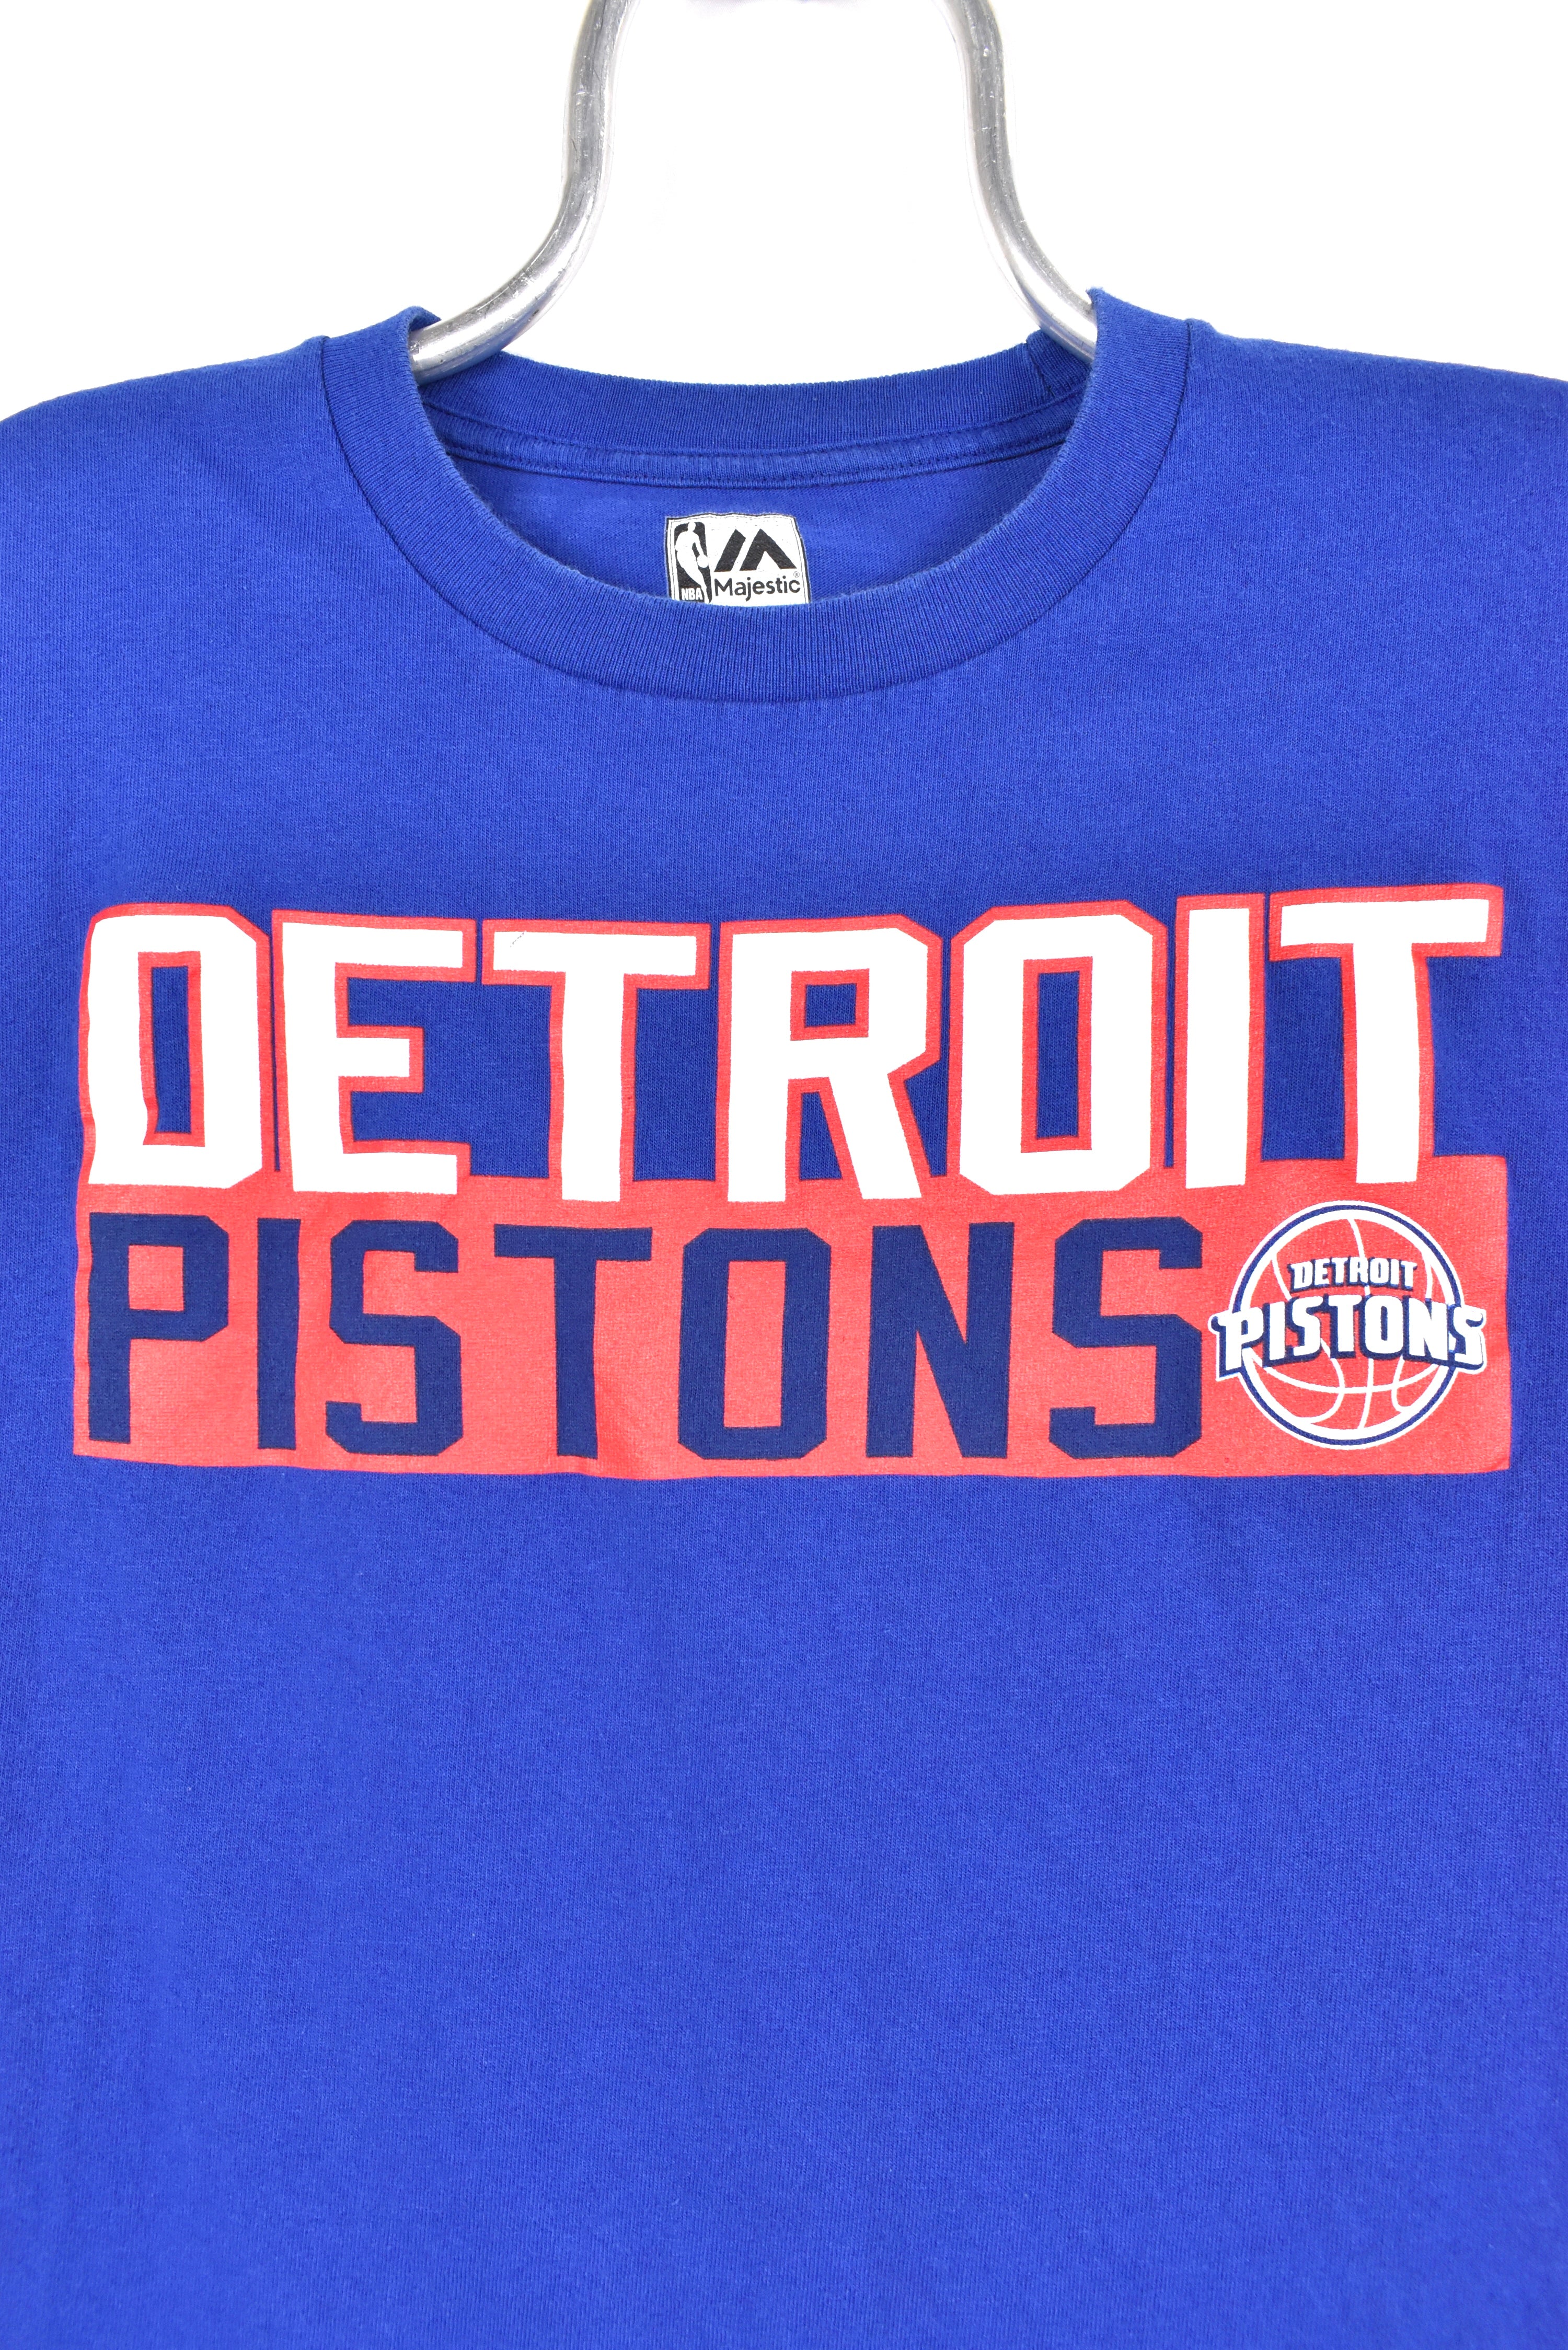 Modern Detroit Pistons shirt, NBA blue graphic tee - AU Large PRO SPORT